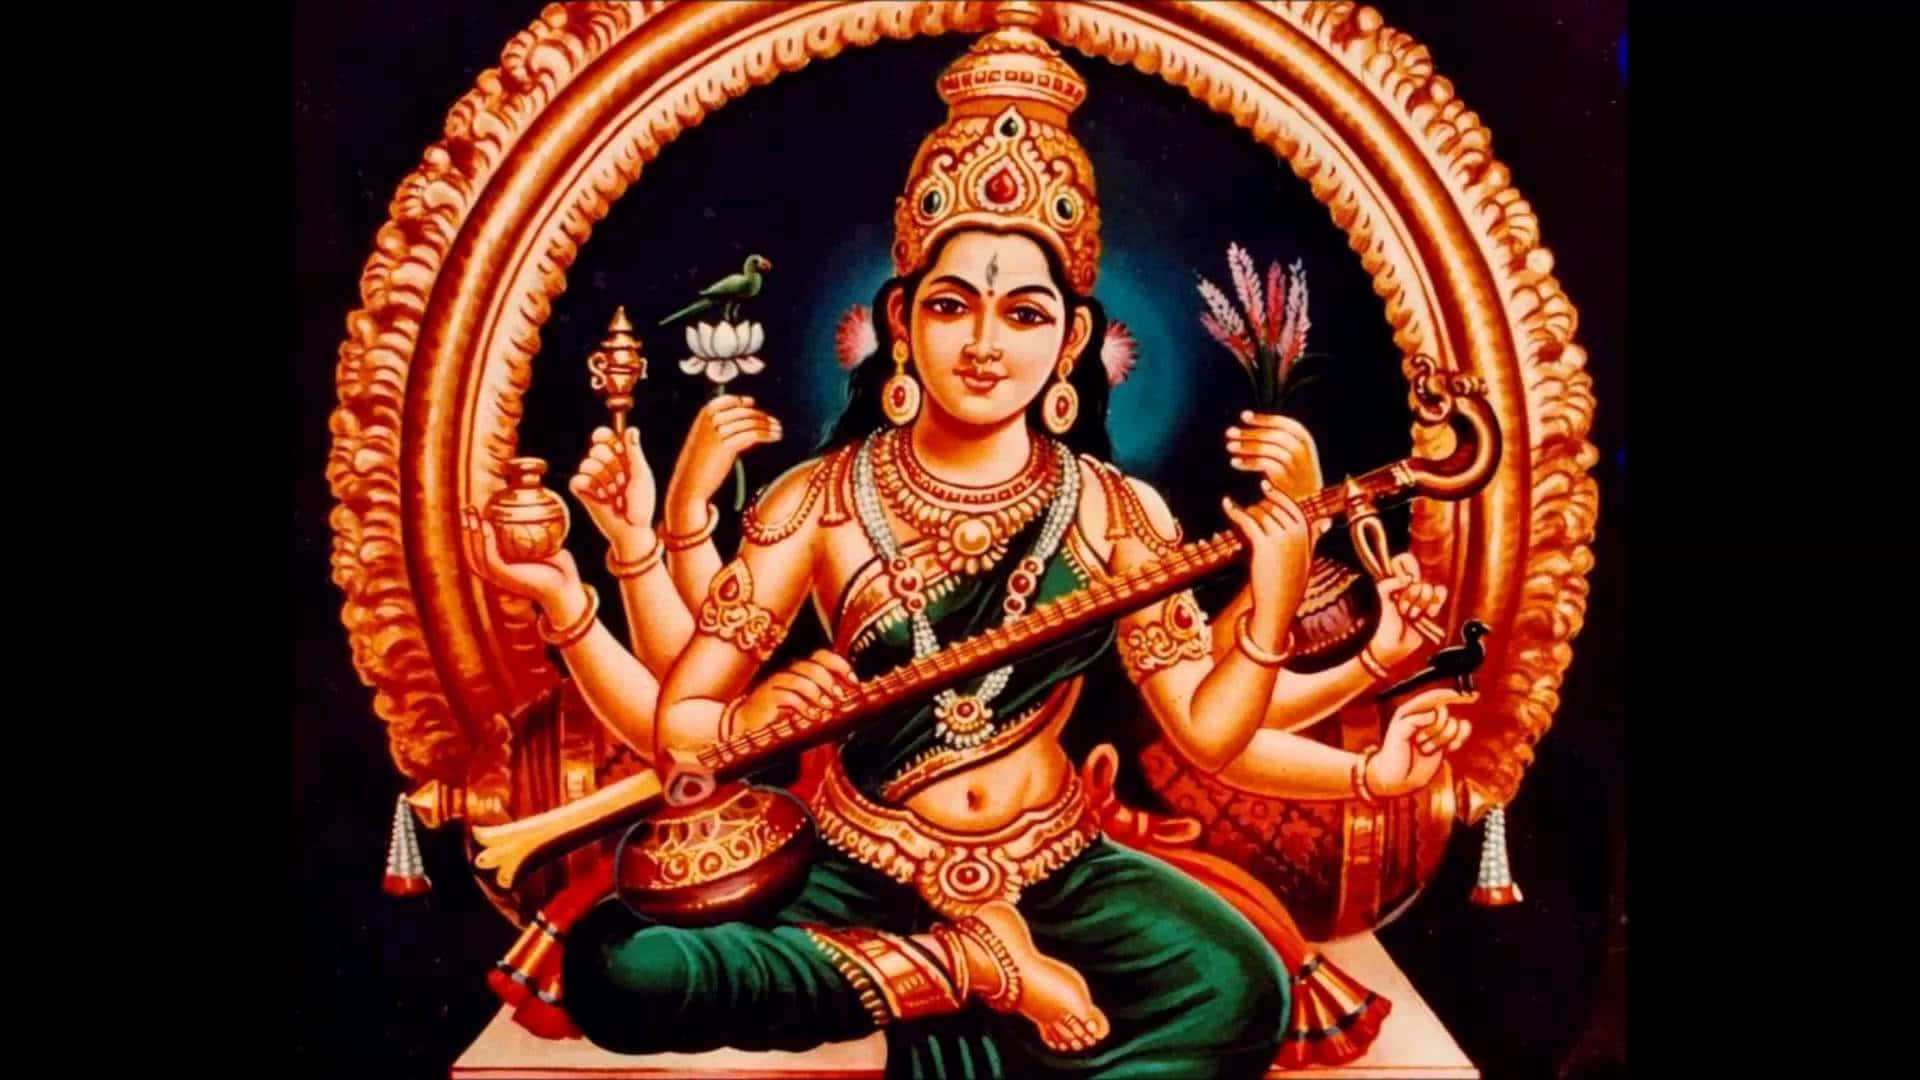 Devotional Splendor - Vibrant Image of Hindu Gods